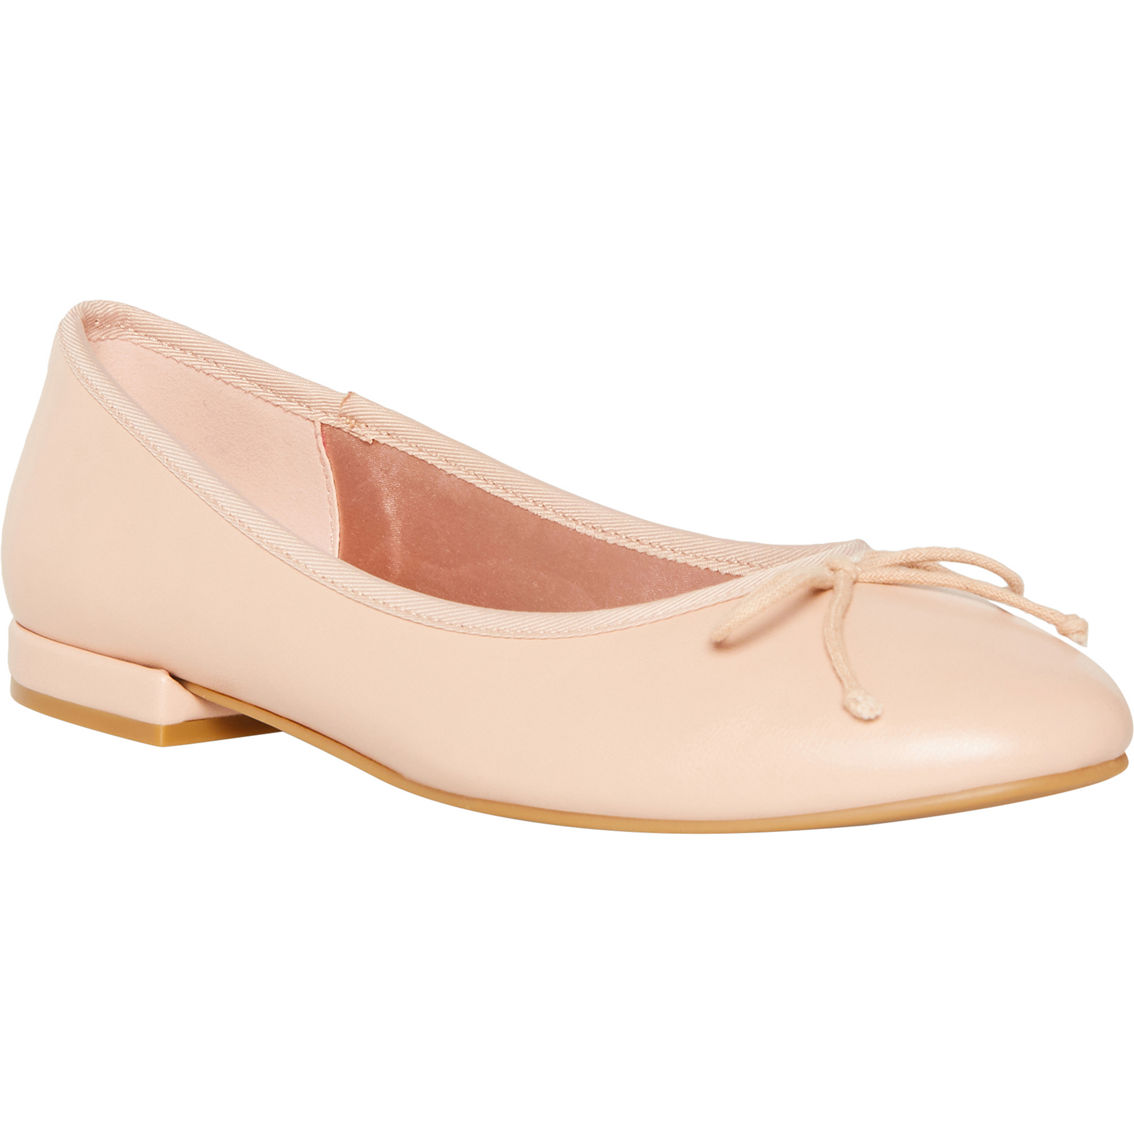 Madden Girl Plie Ballet Flats | Flats | Shoes | Shop The Exchange